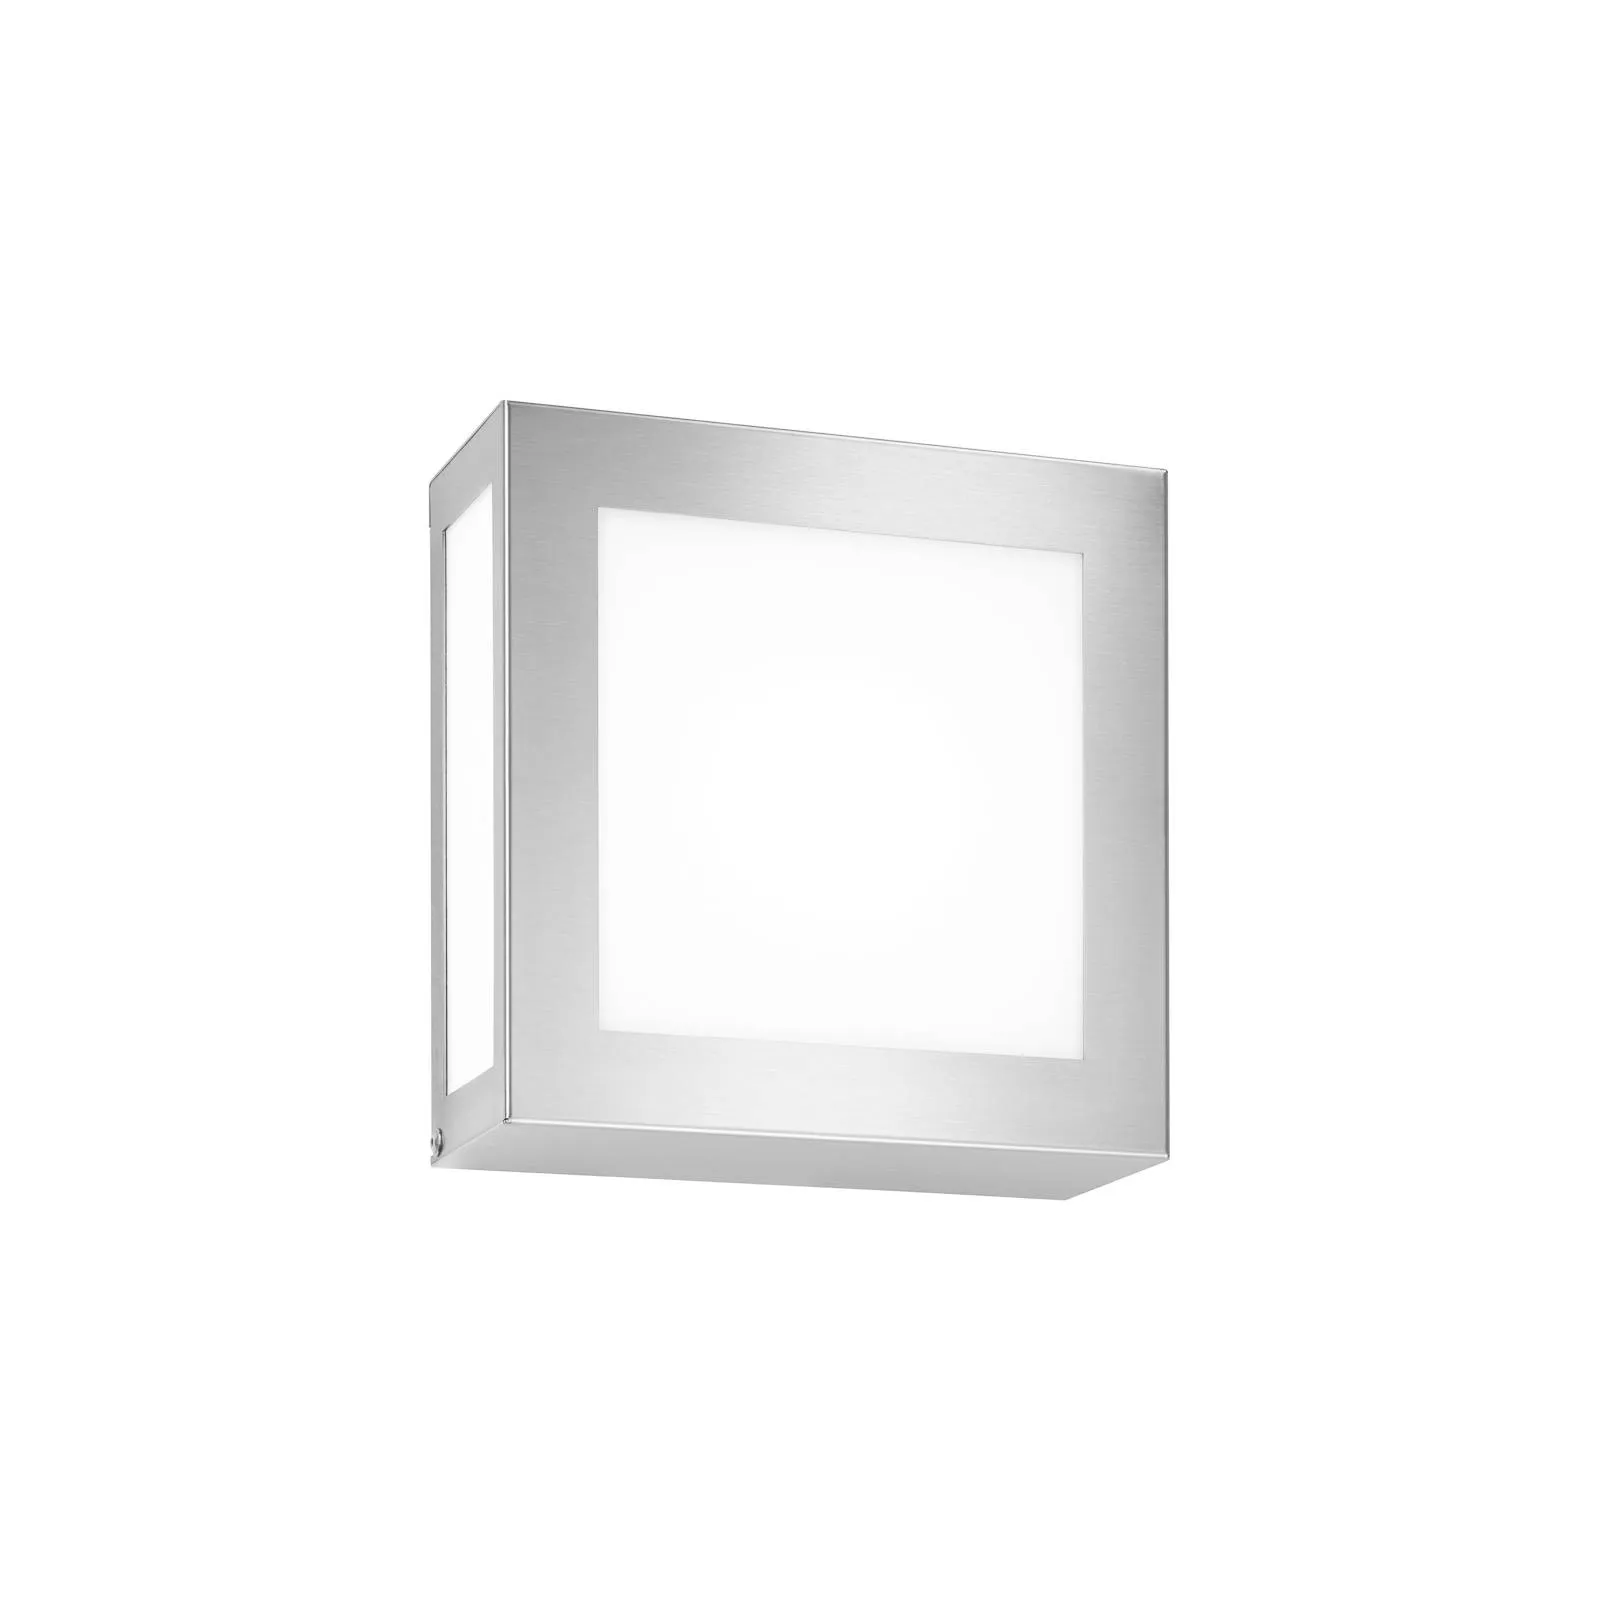 Aqua Legendo Mini stainless steel wall light